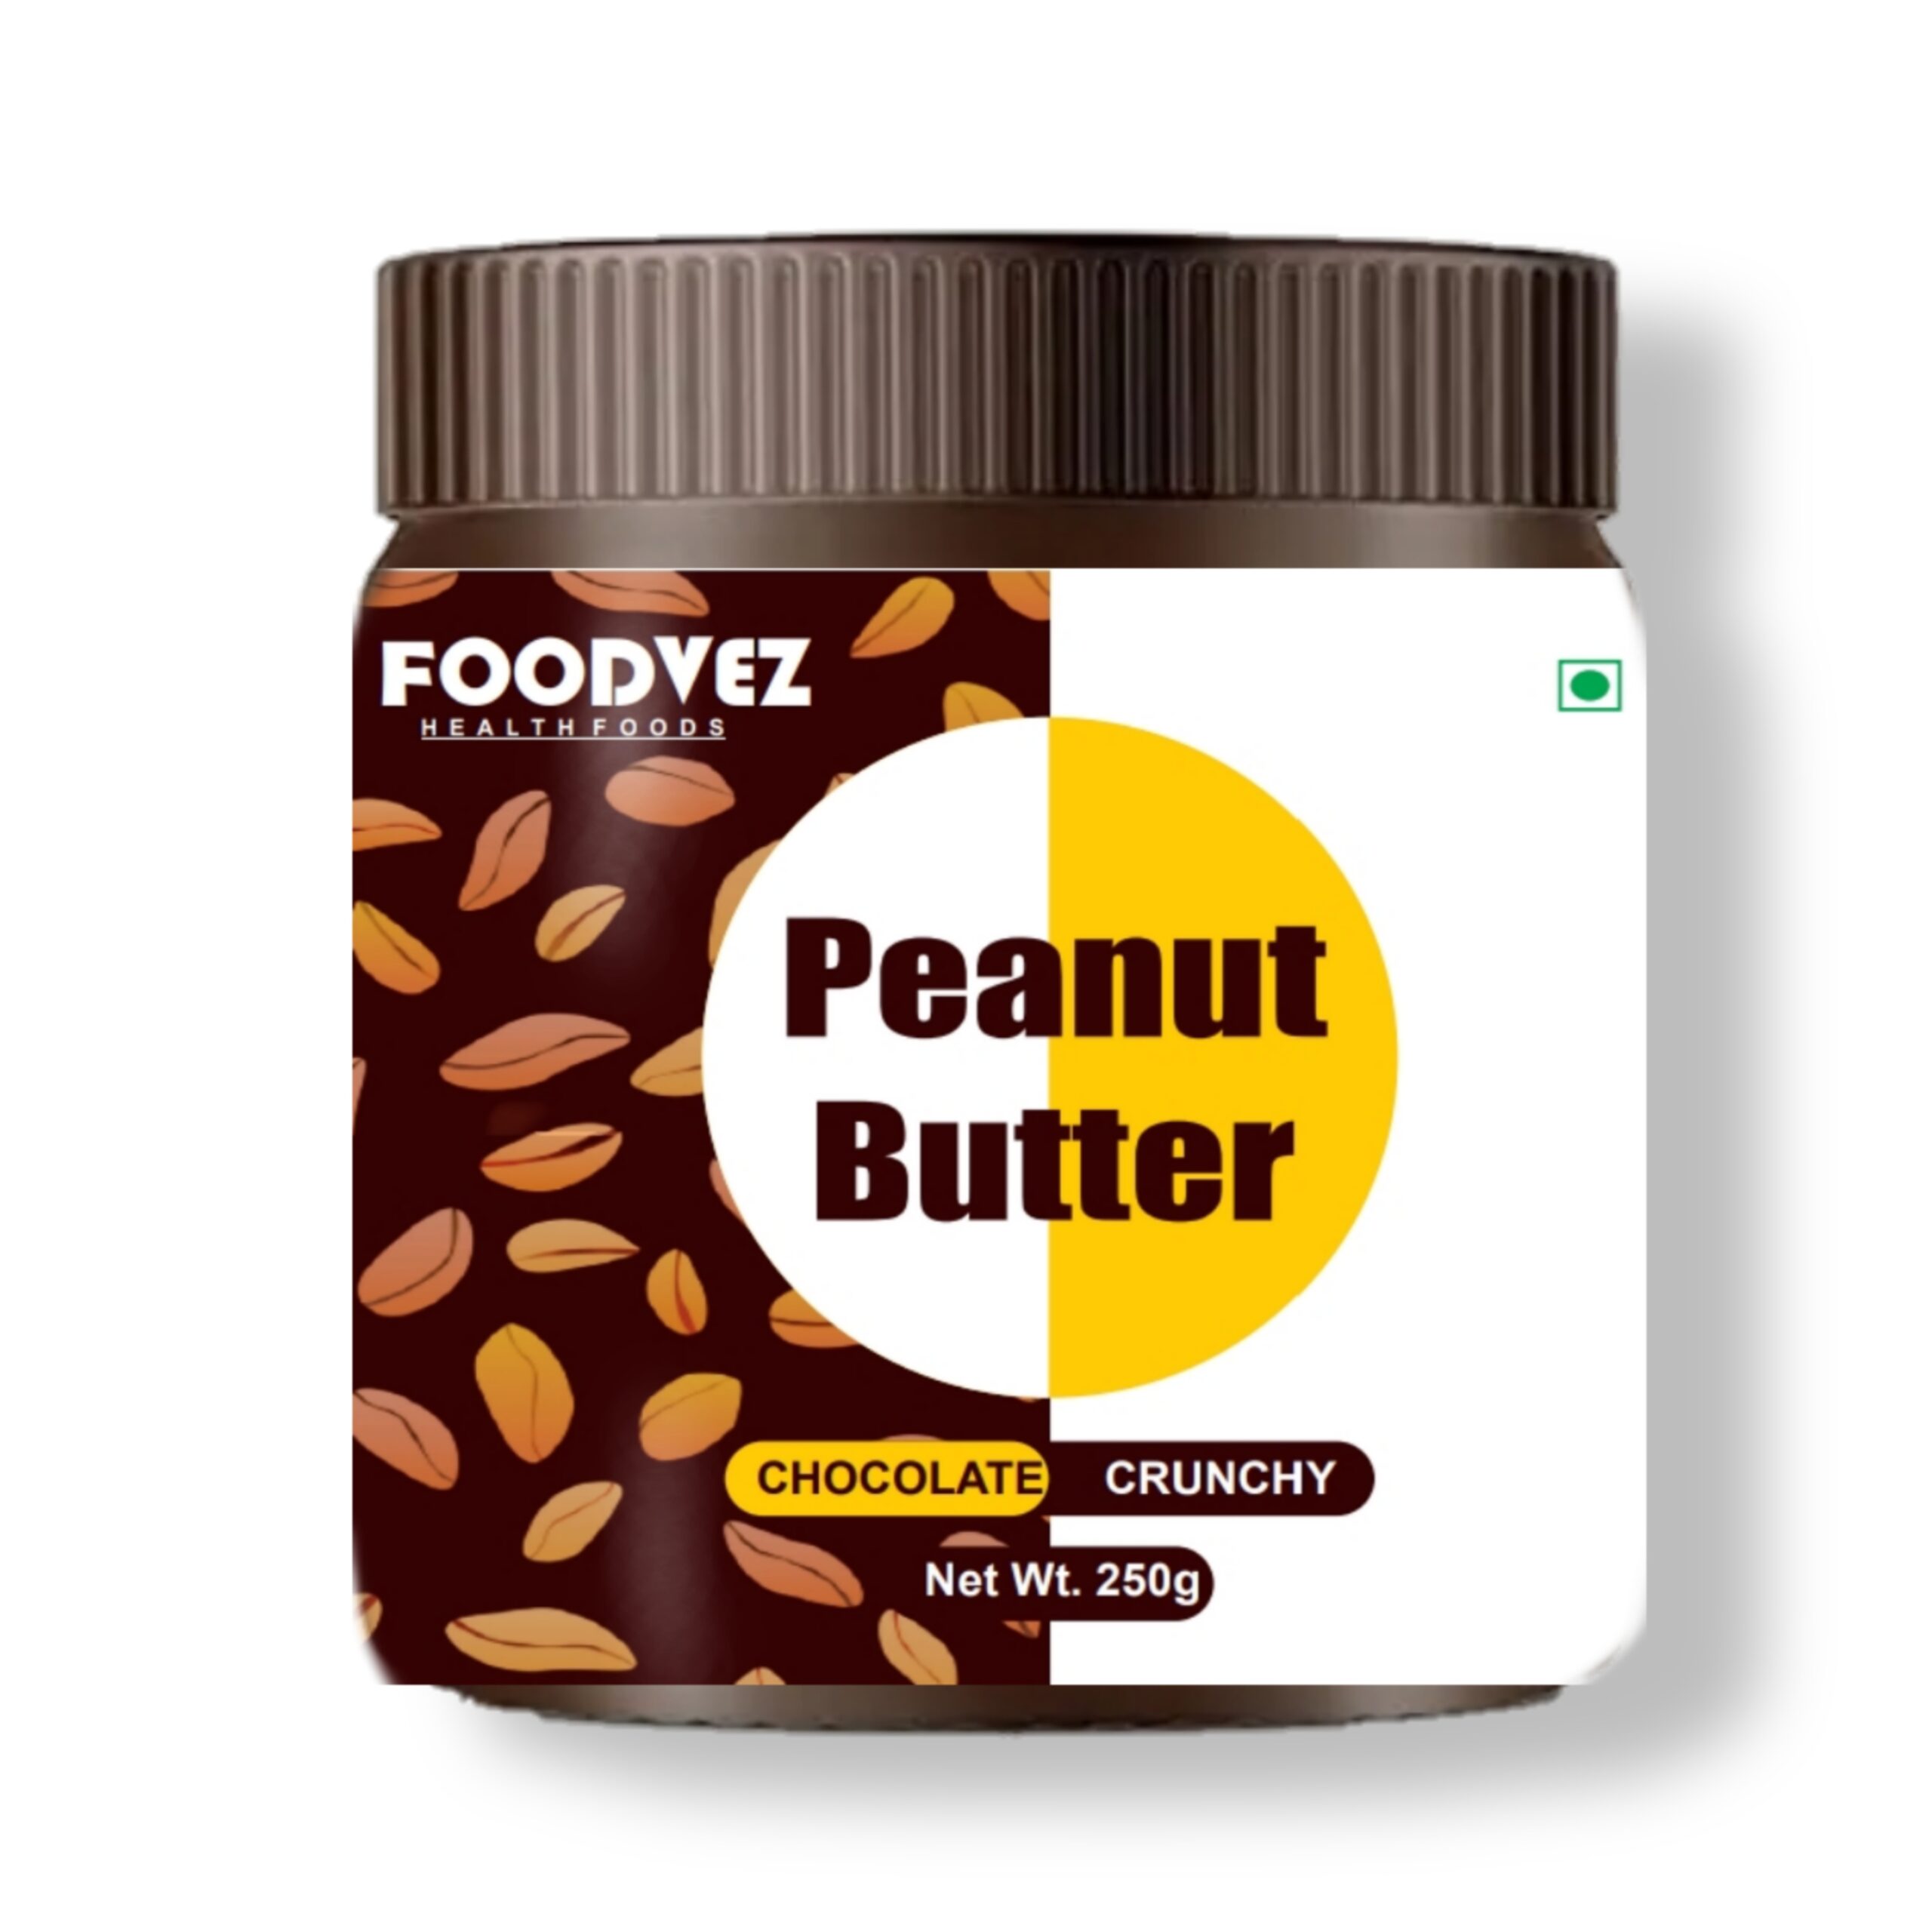 Foodvez Chocolate Crunchy Peanut Butter ...